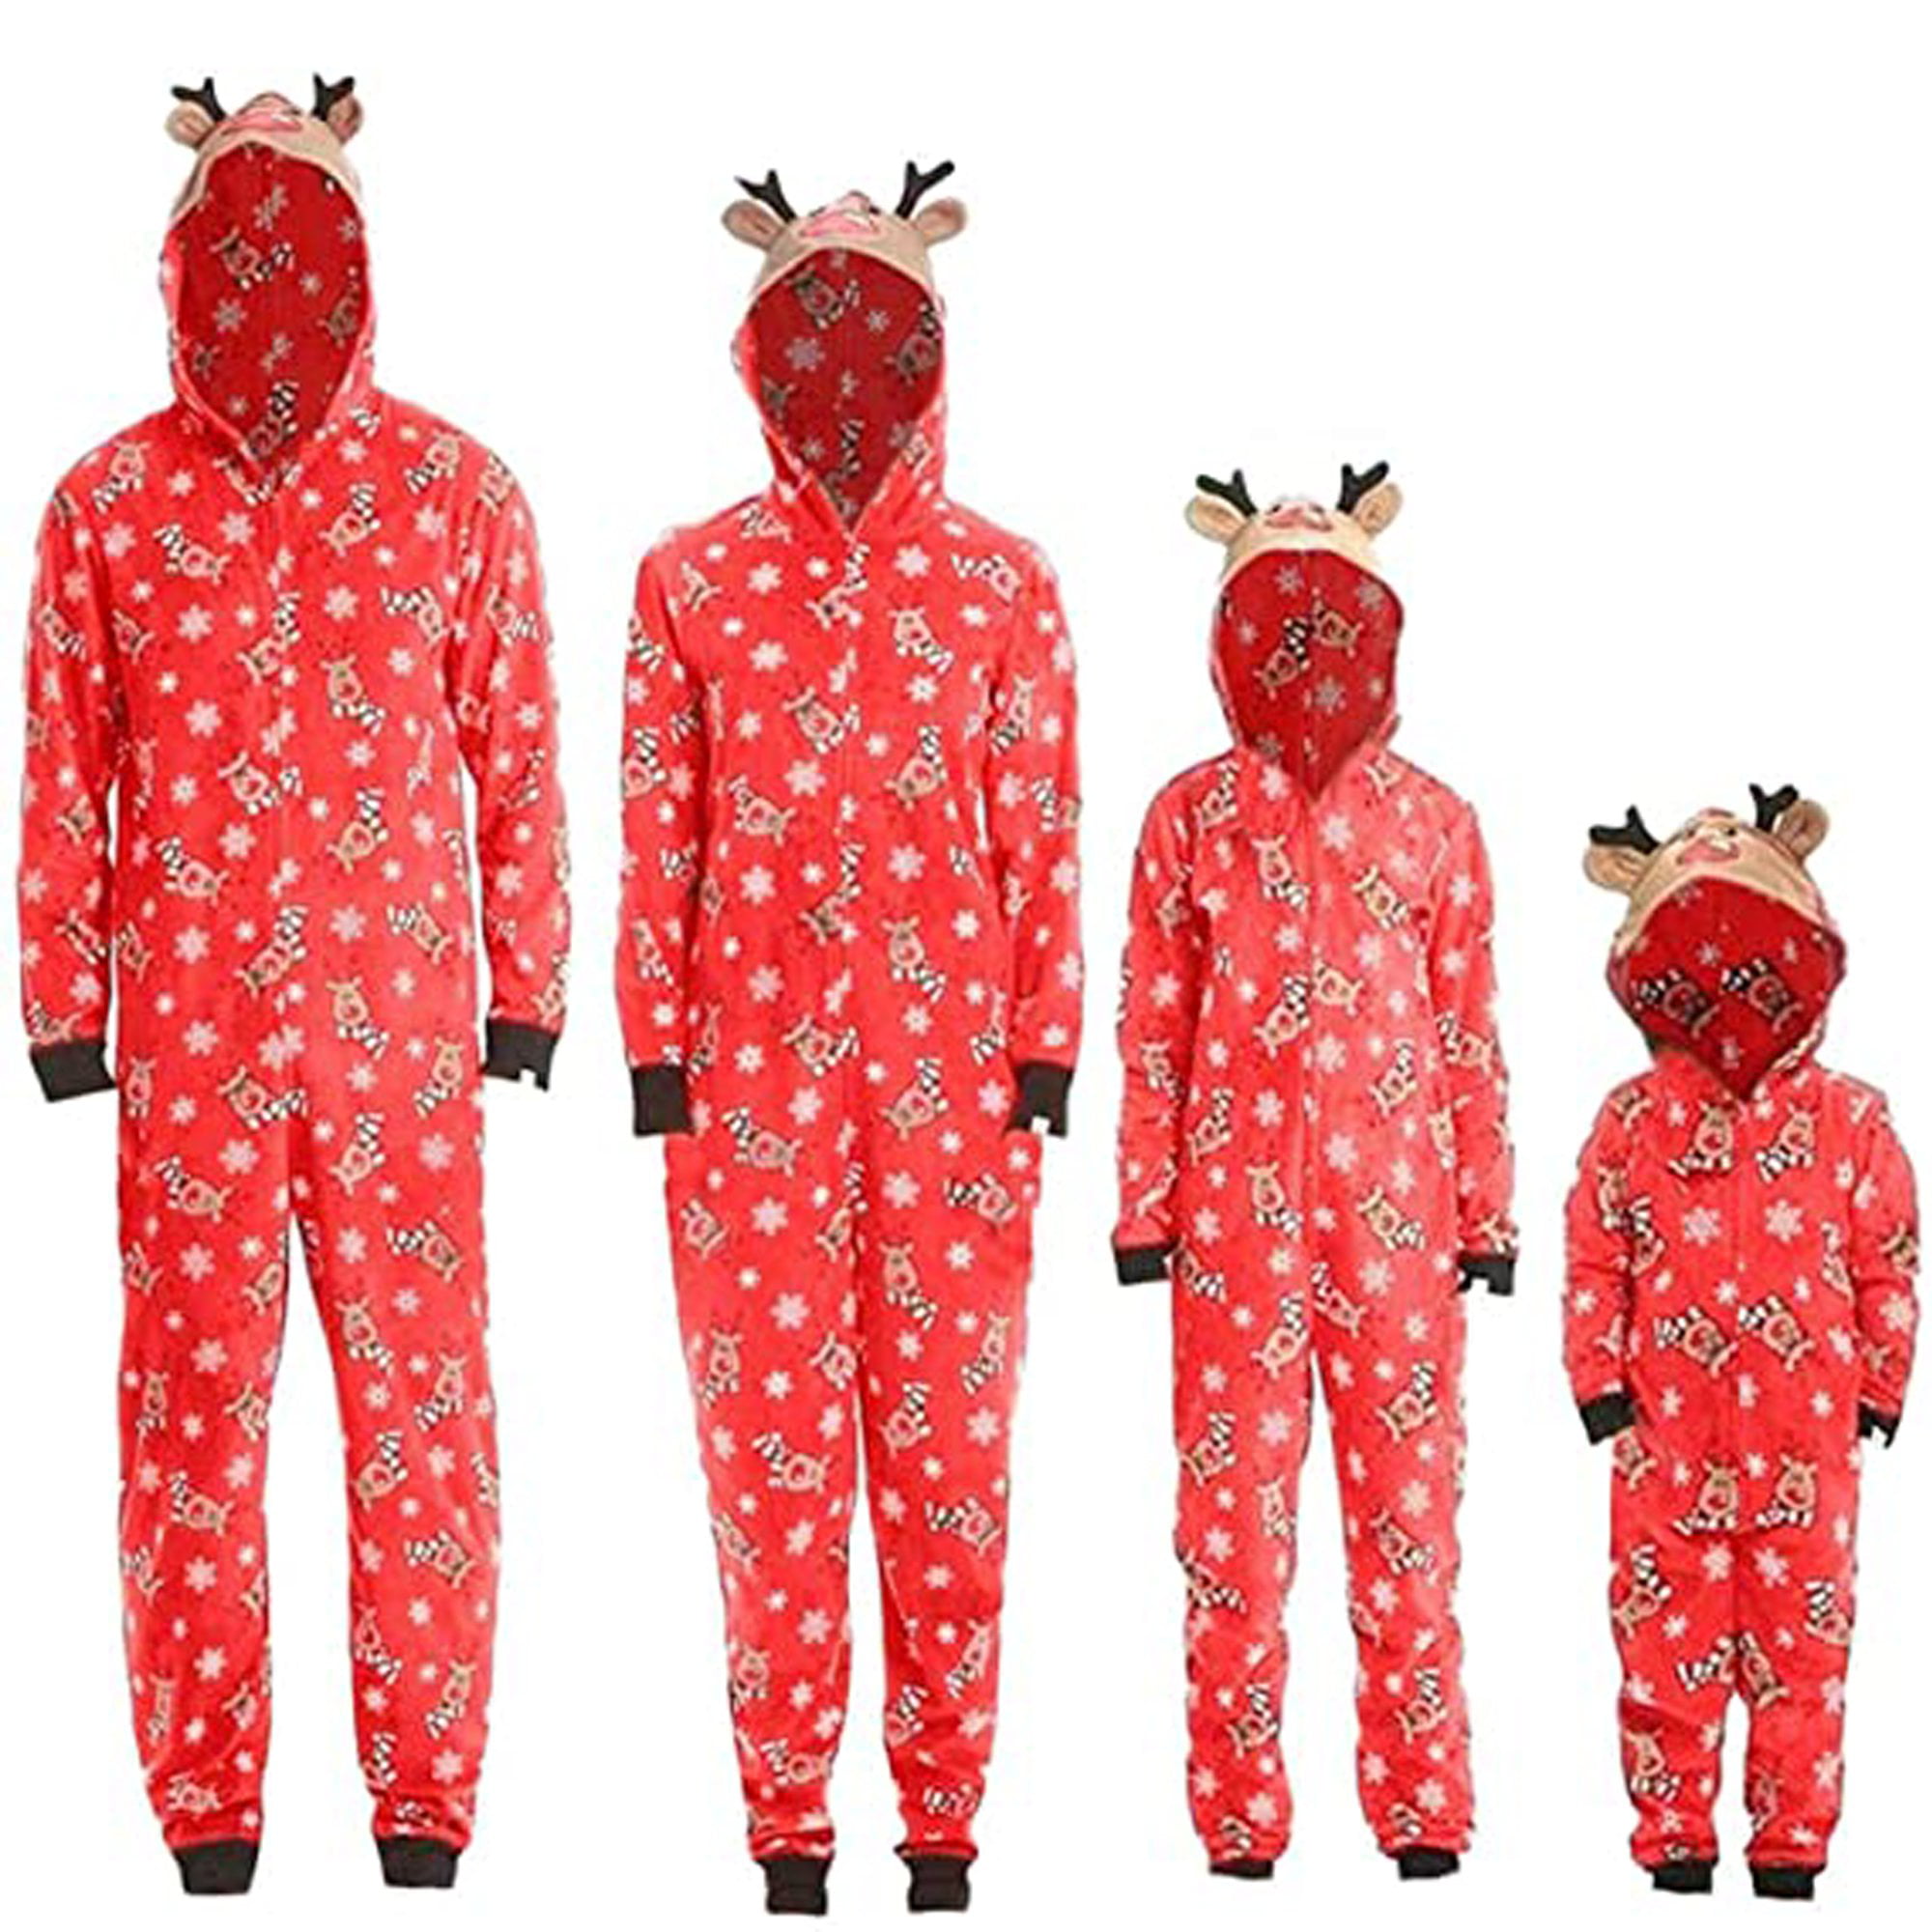 Pijamas de conejitas para niñas de 1 a 12 años, Jammies de niñas